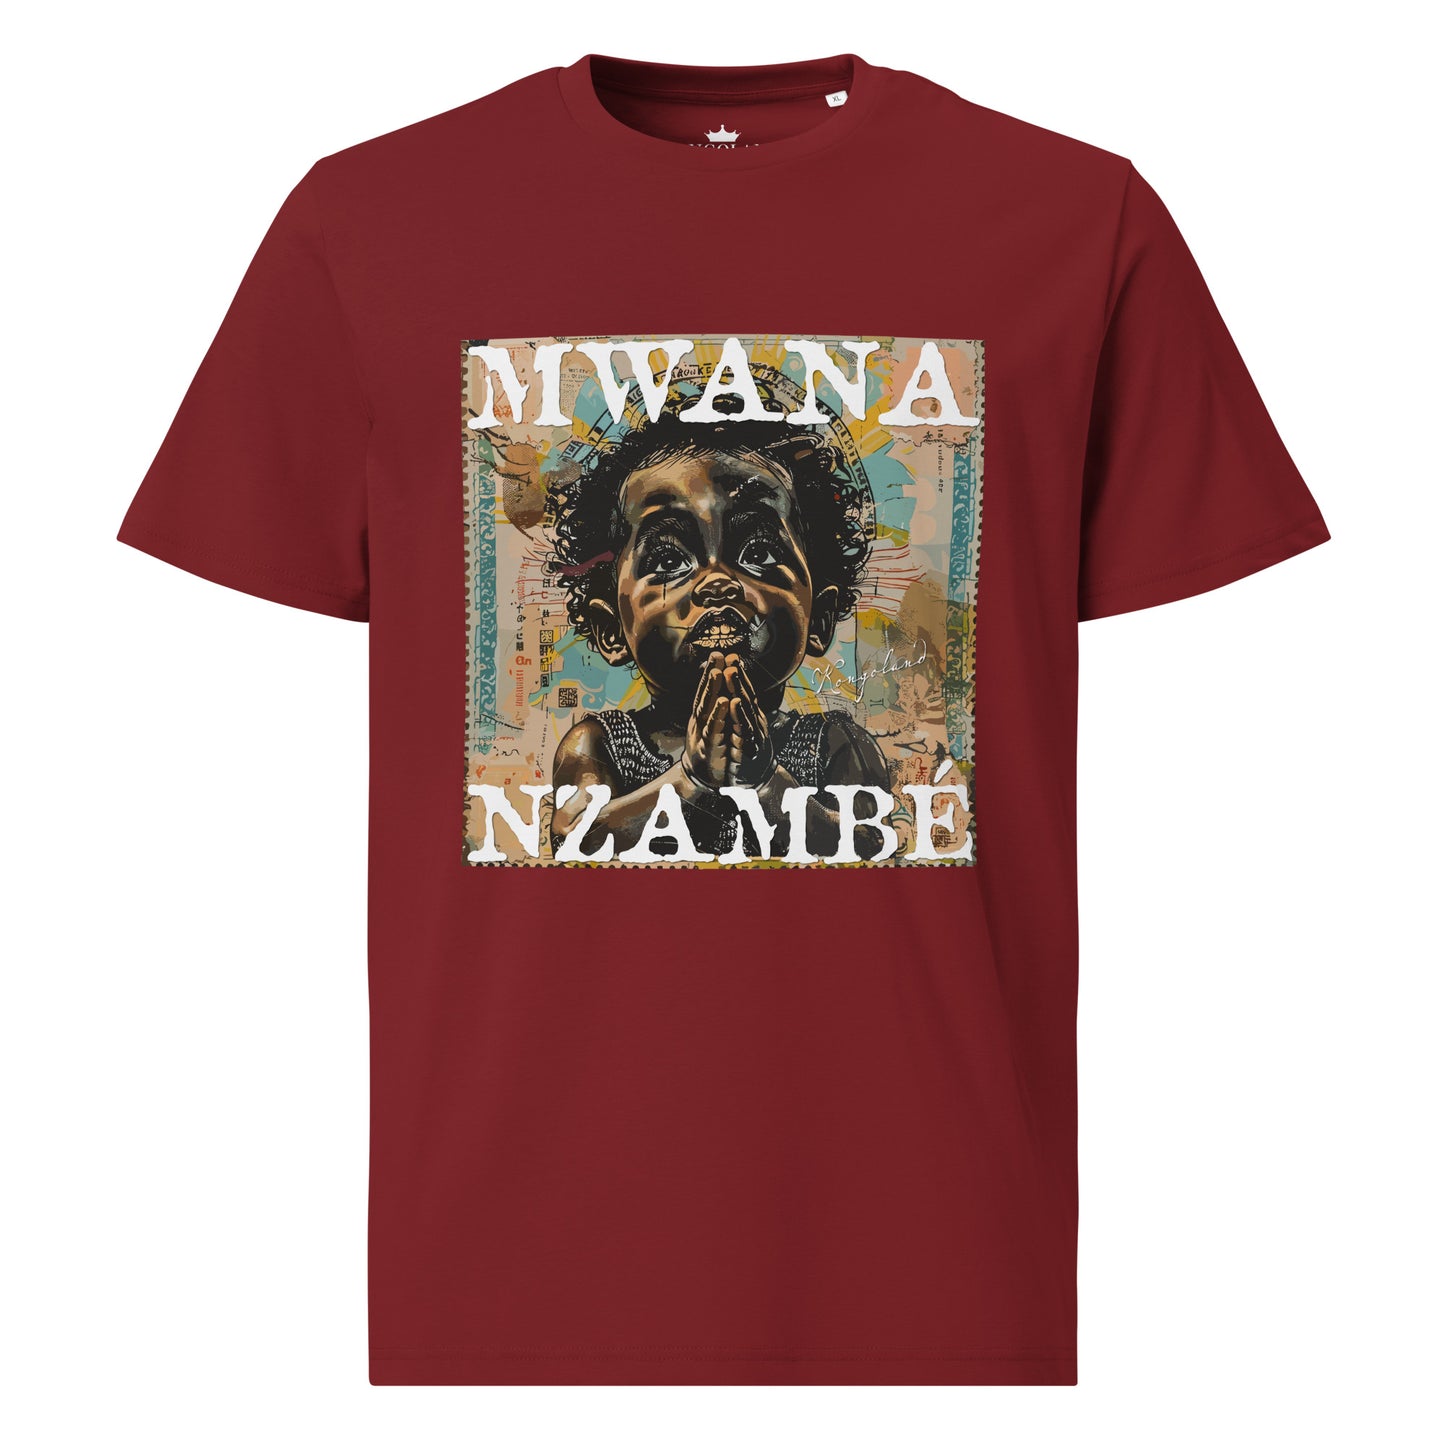 T-shirt Kongoland MWANA NZAMBÉ en coton biologique unisexe